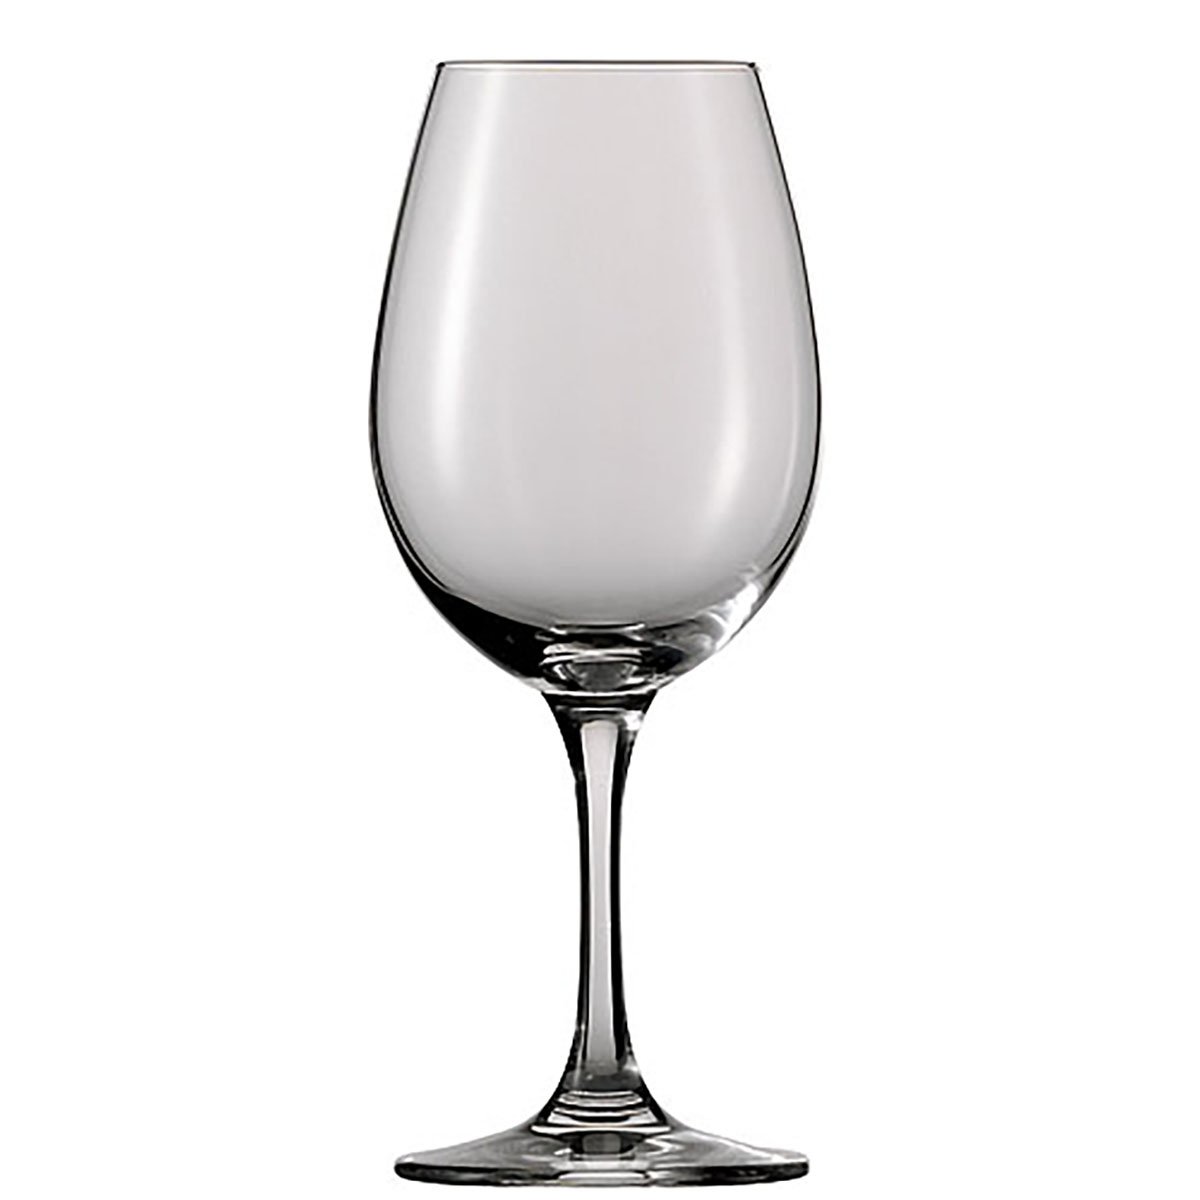 Schott Zwiesel Tritan Crystal, Sensus Professional Crystal Wine Taster, Set of Six